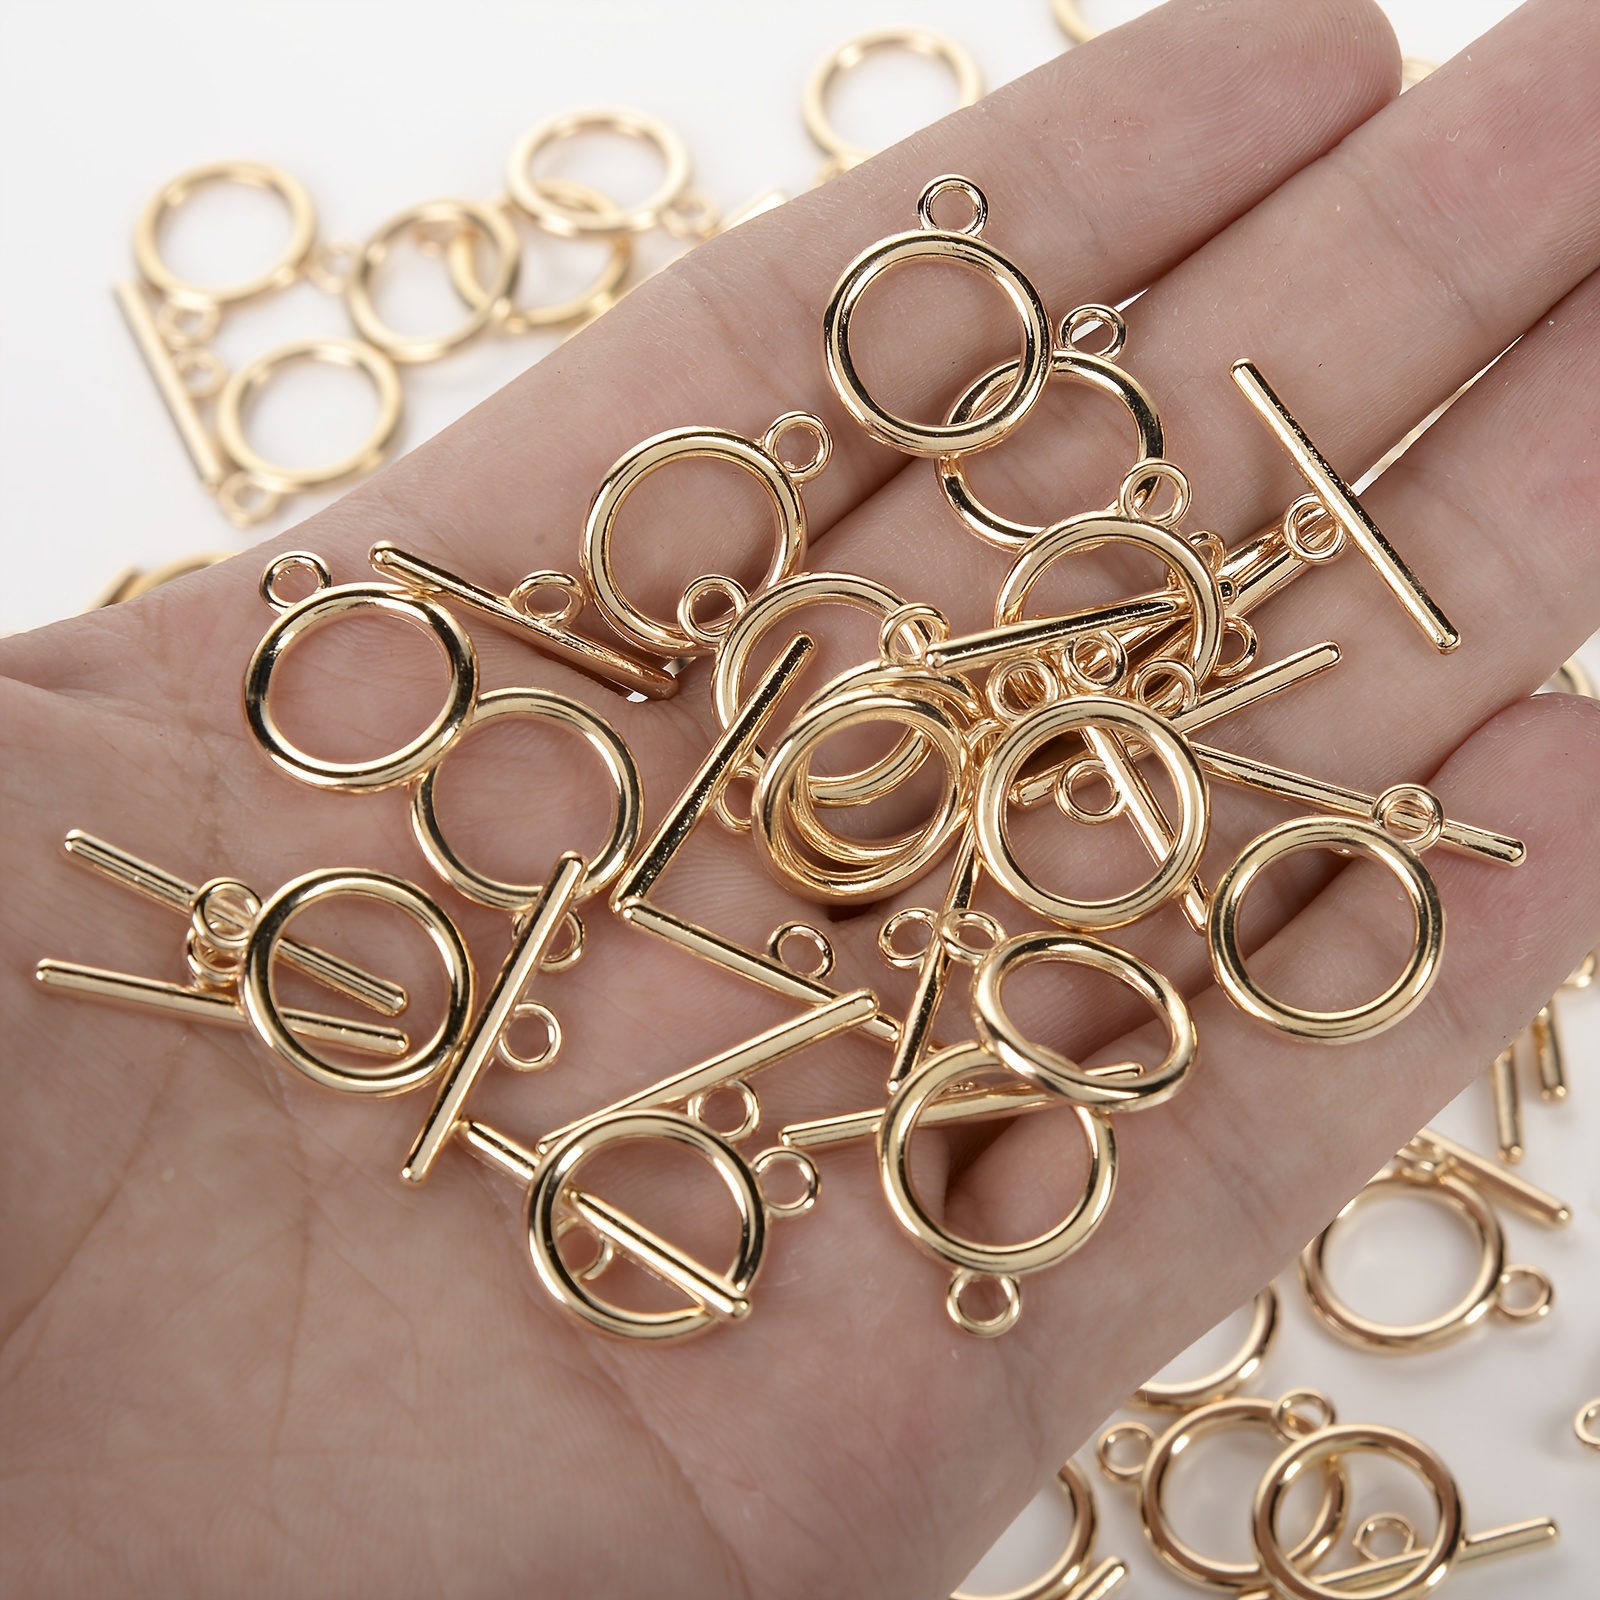 1pc Stainless Steel Chain Locks Spiral Lock Hook Clasps Jewelry Making  Supplies